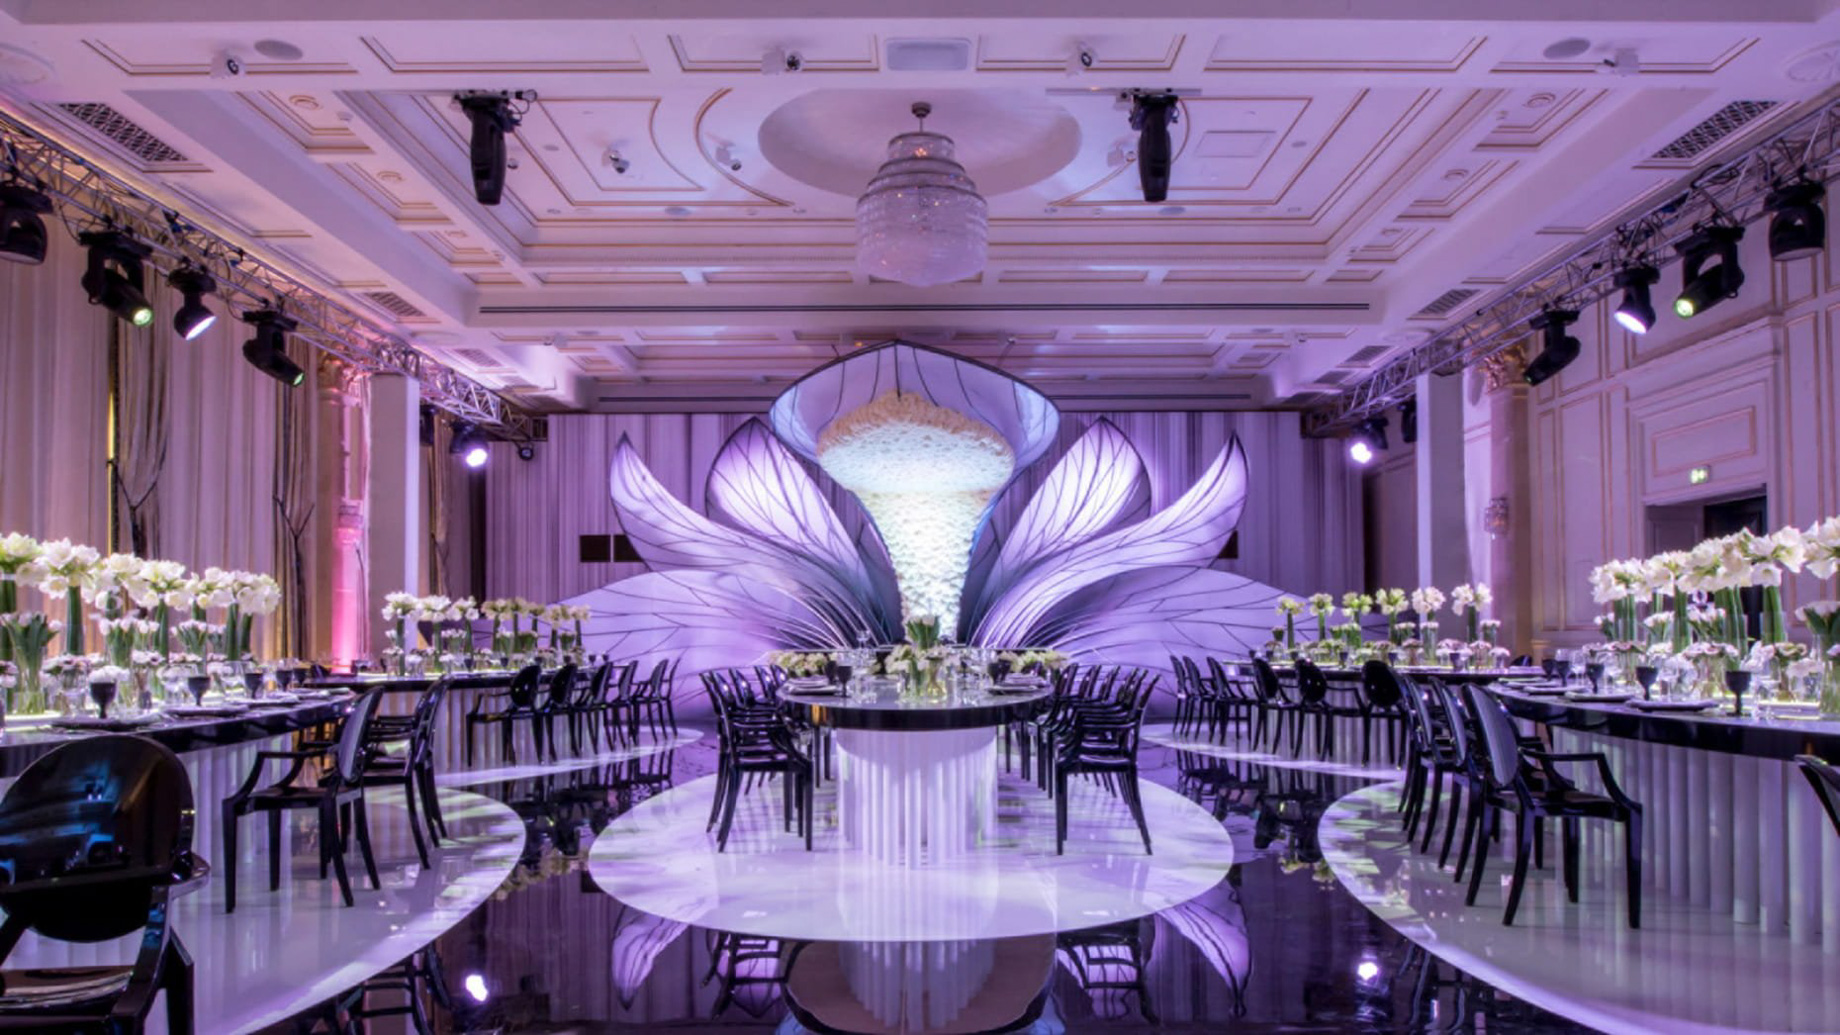 Four Seasons Hotel Moscow – Moscow, Russia – Ballroom Wedding Reception